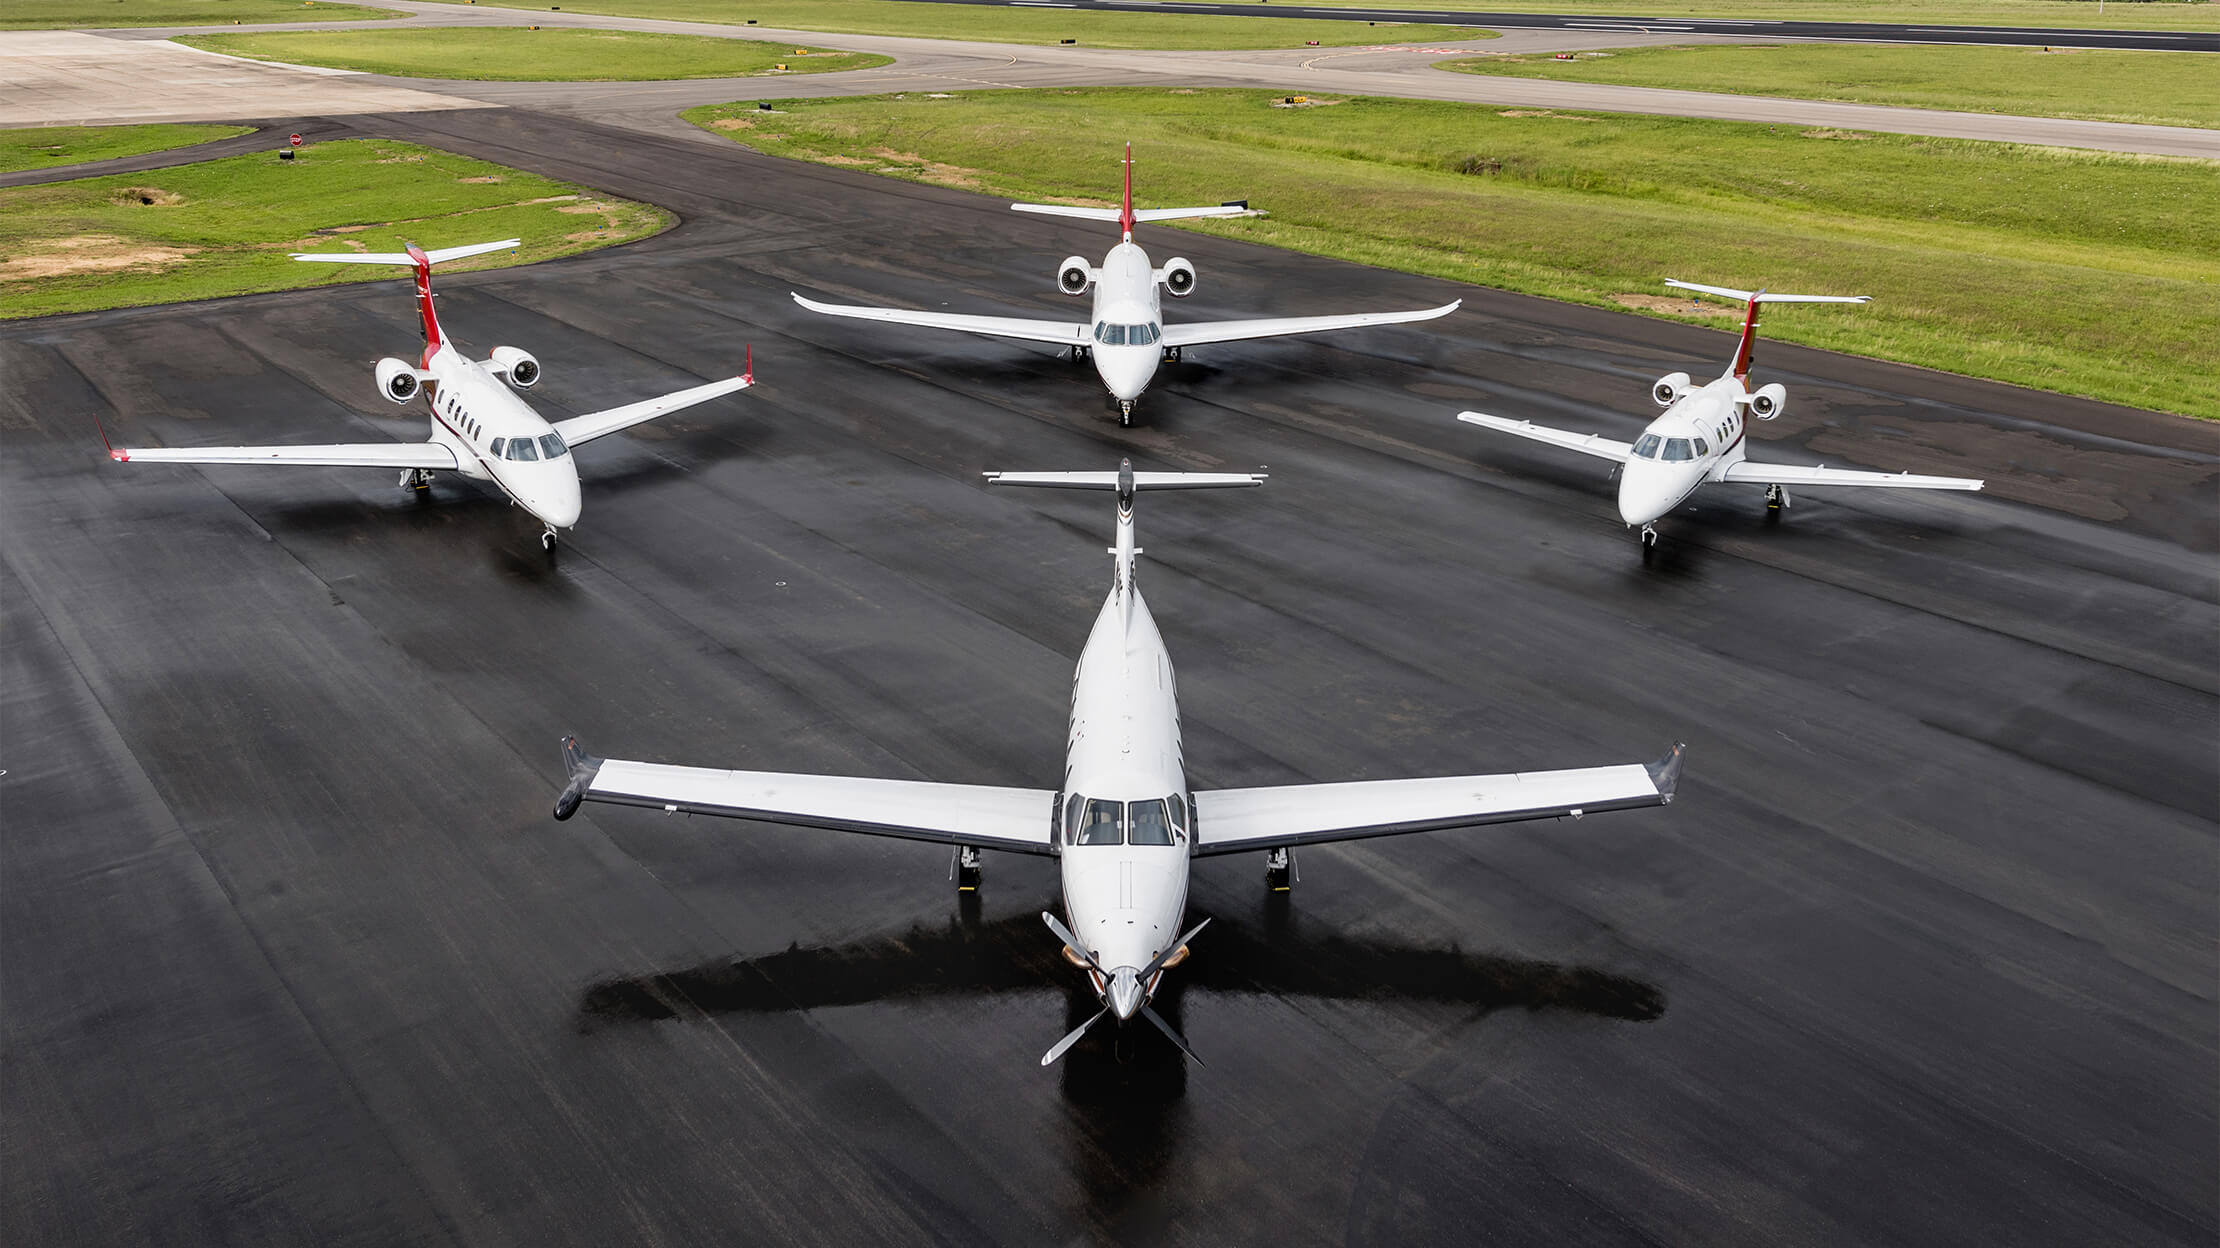 Four Jets on a Runway including a Pilatus PC-12, Embraer Phenom 100, Embraer Phenom 300, and a Citation Latitude